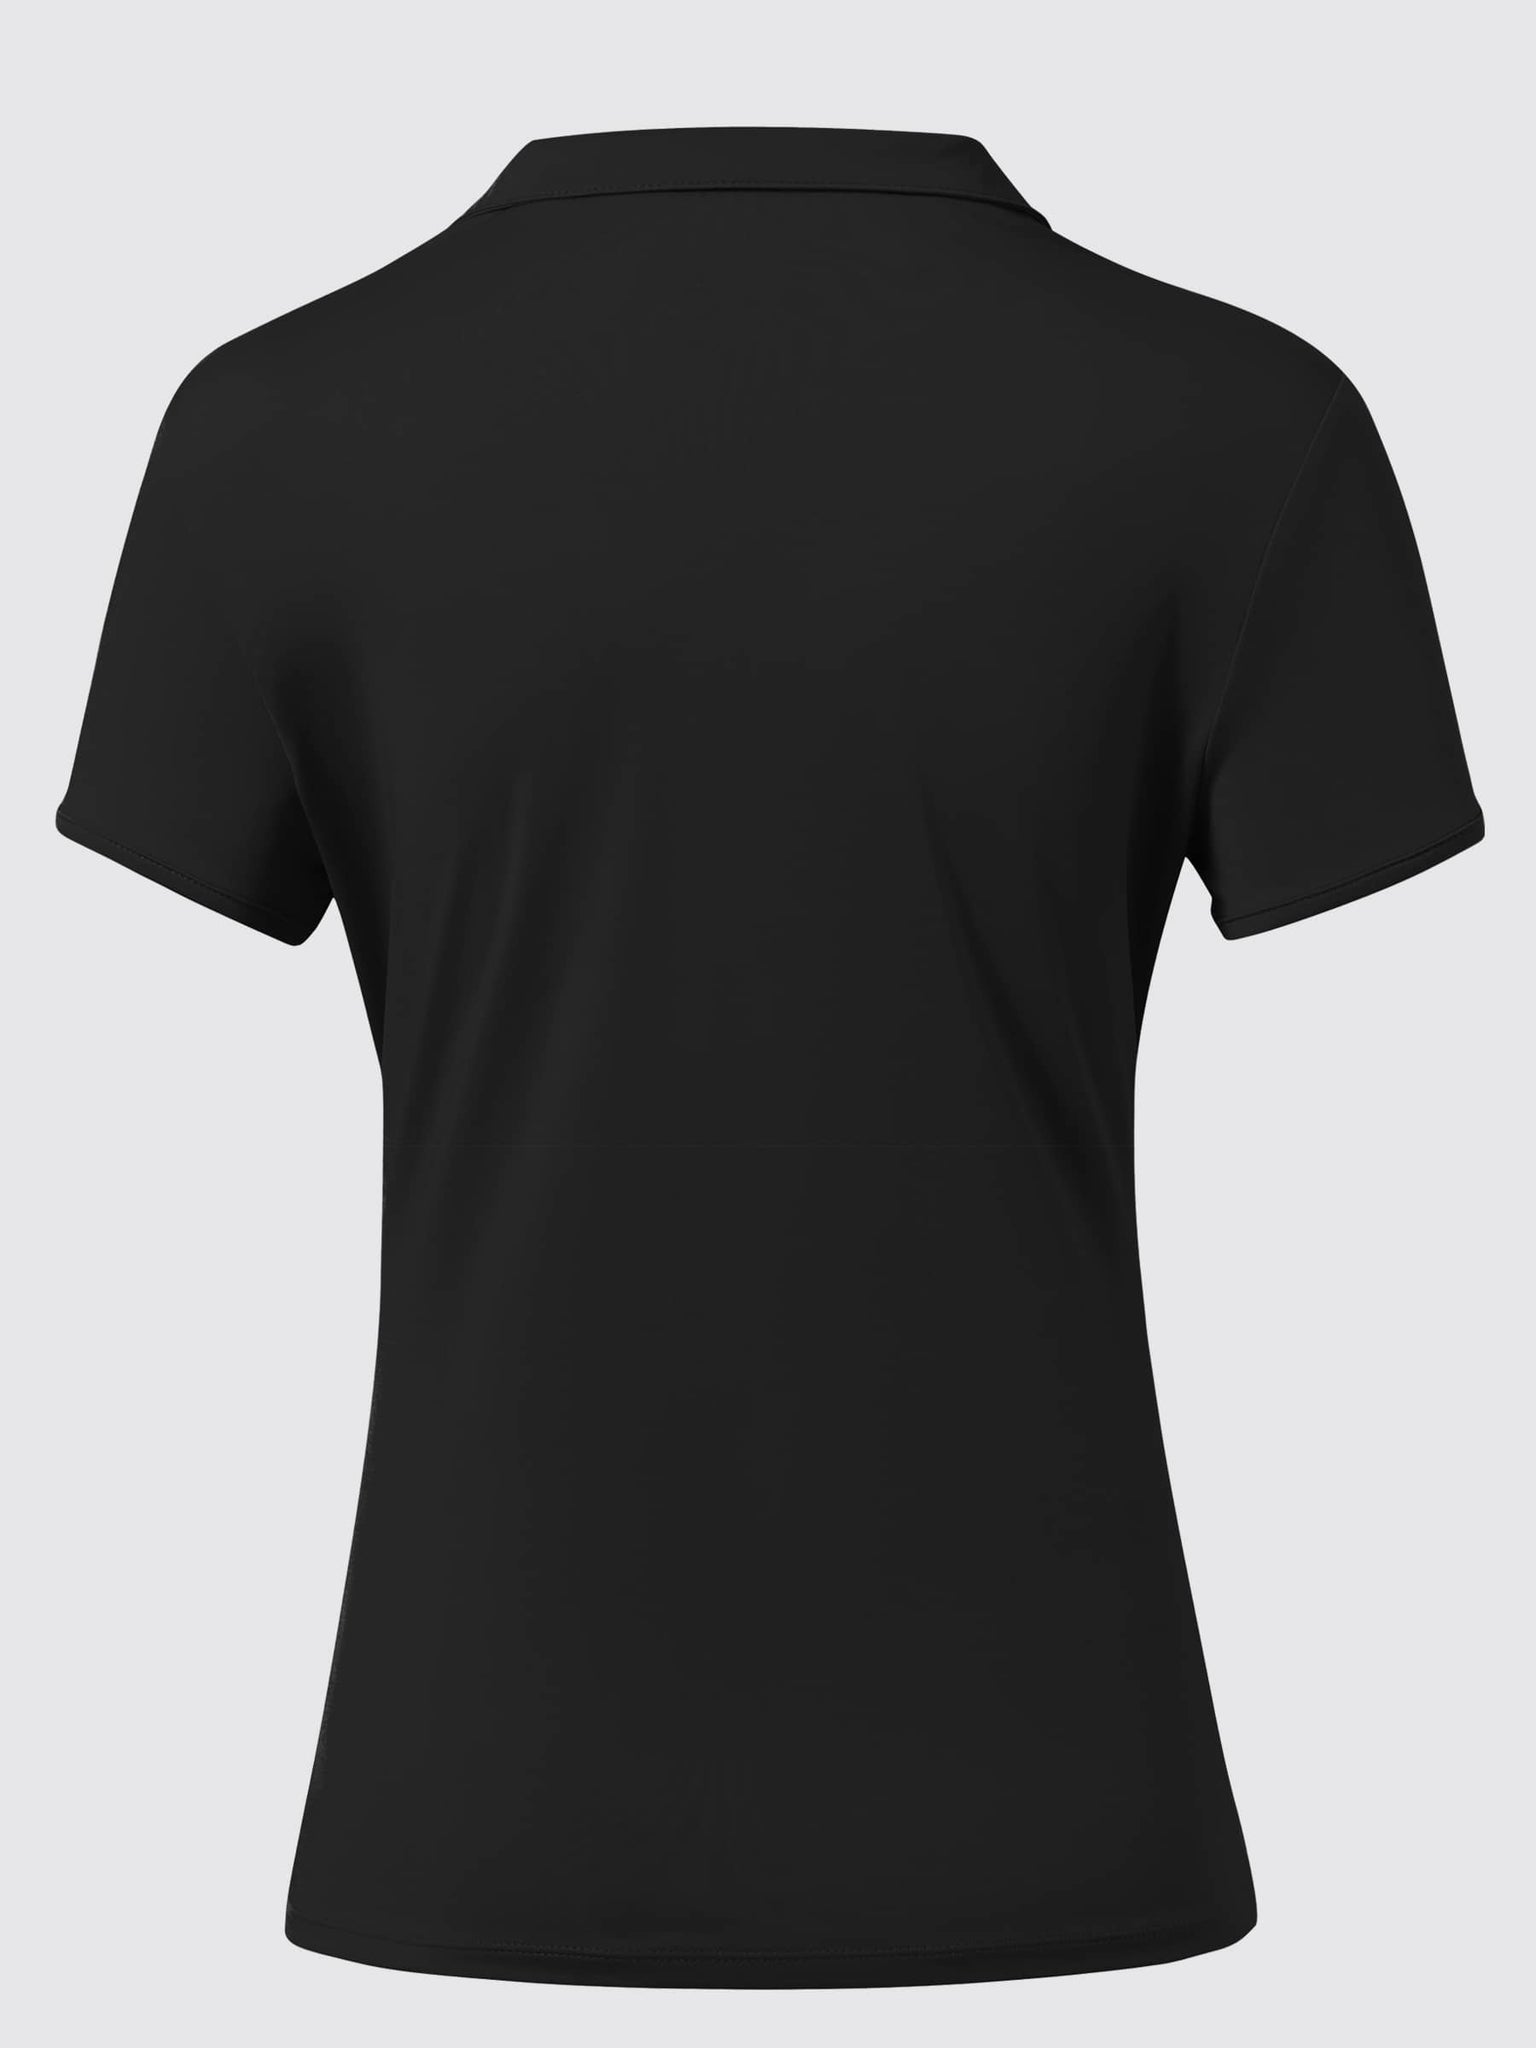 Willit Women's Golf Polo Short Sleeve Shirts_Black3